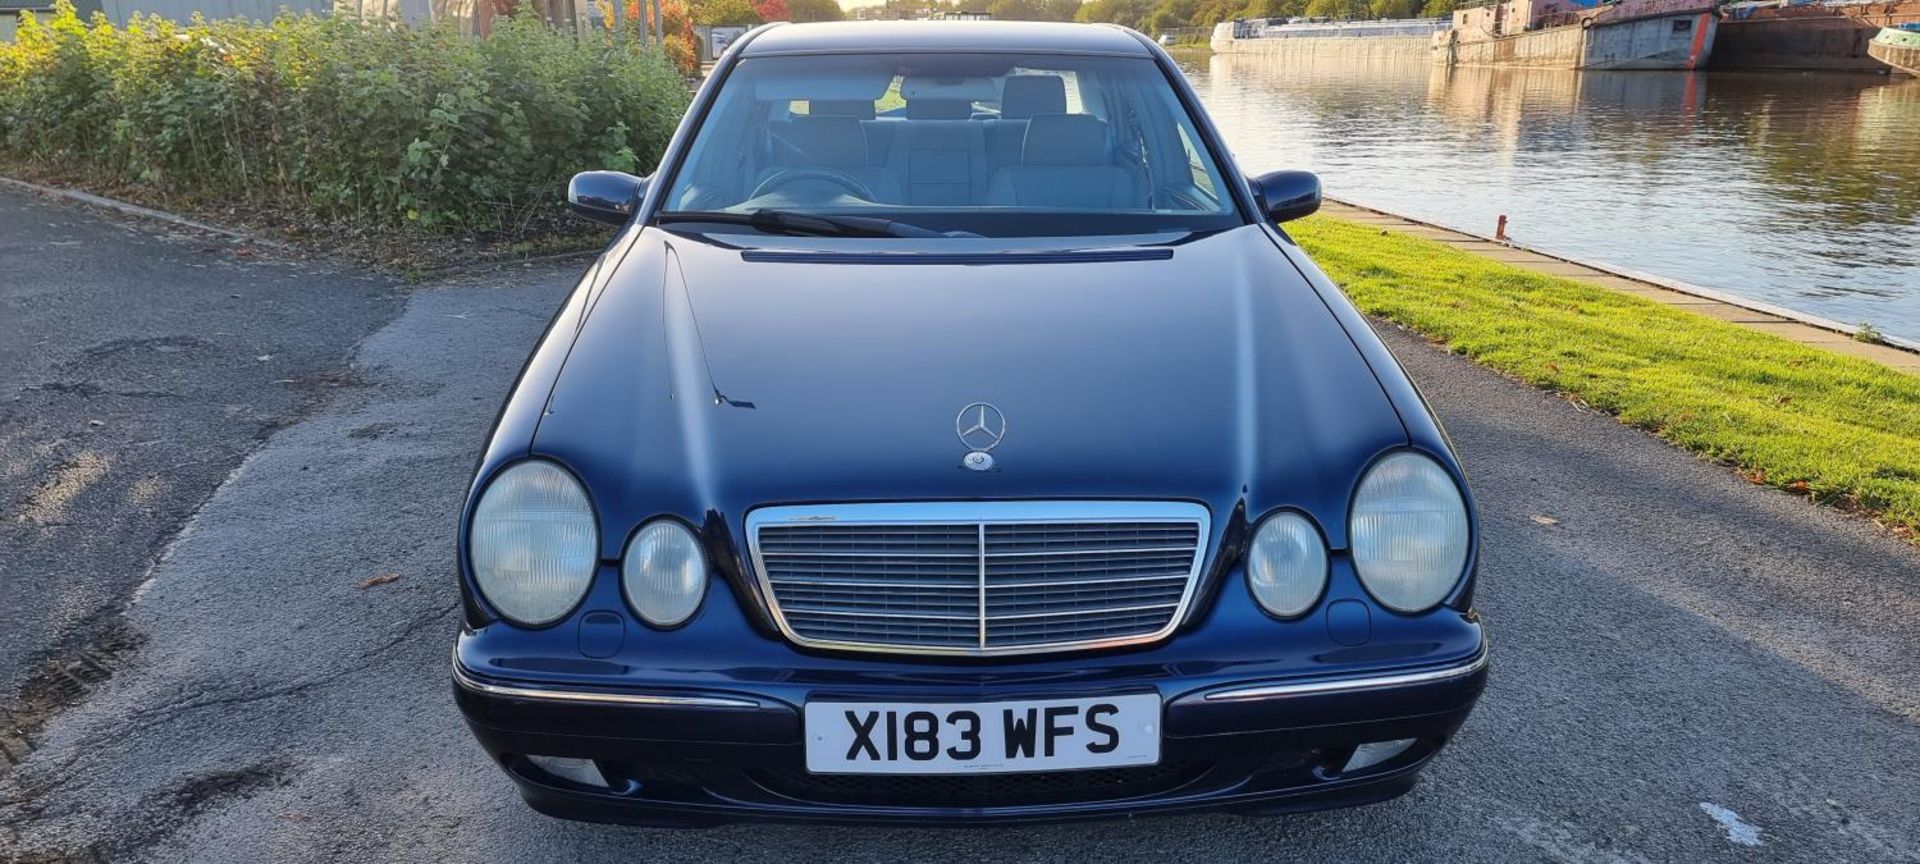 2000 Mercedes Benz E240 Elegance, auto, 2398cc petrol. Registration number X183 WFS. - Image 3 of 15